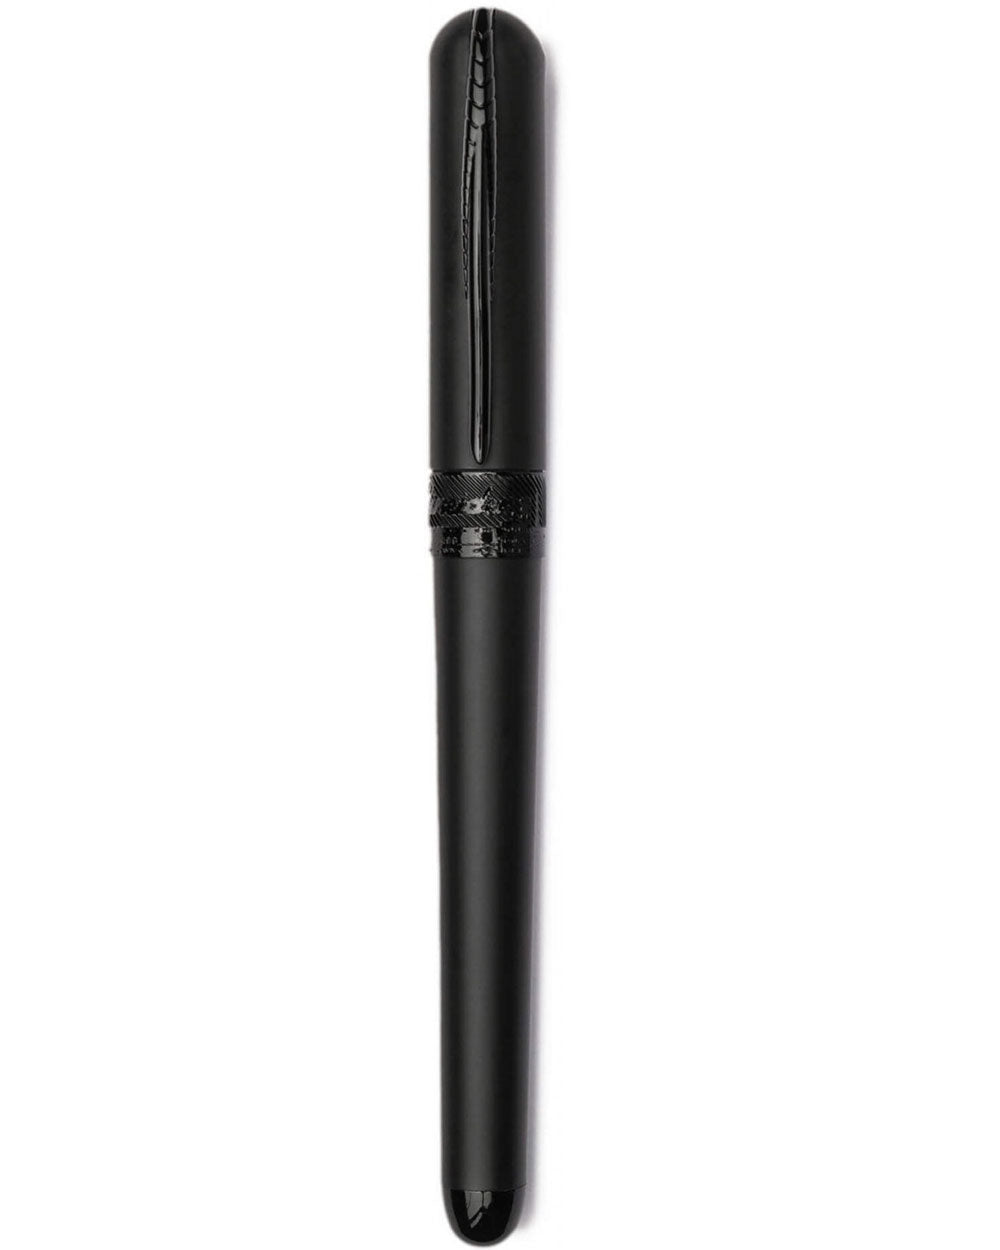 Avatar UR Matte Rollerball Pen in Black